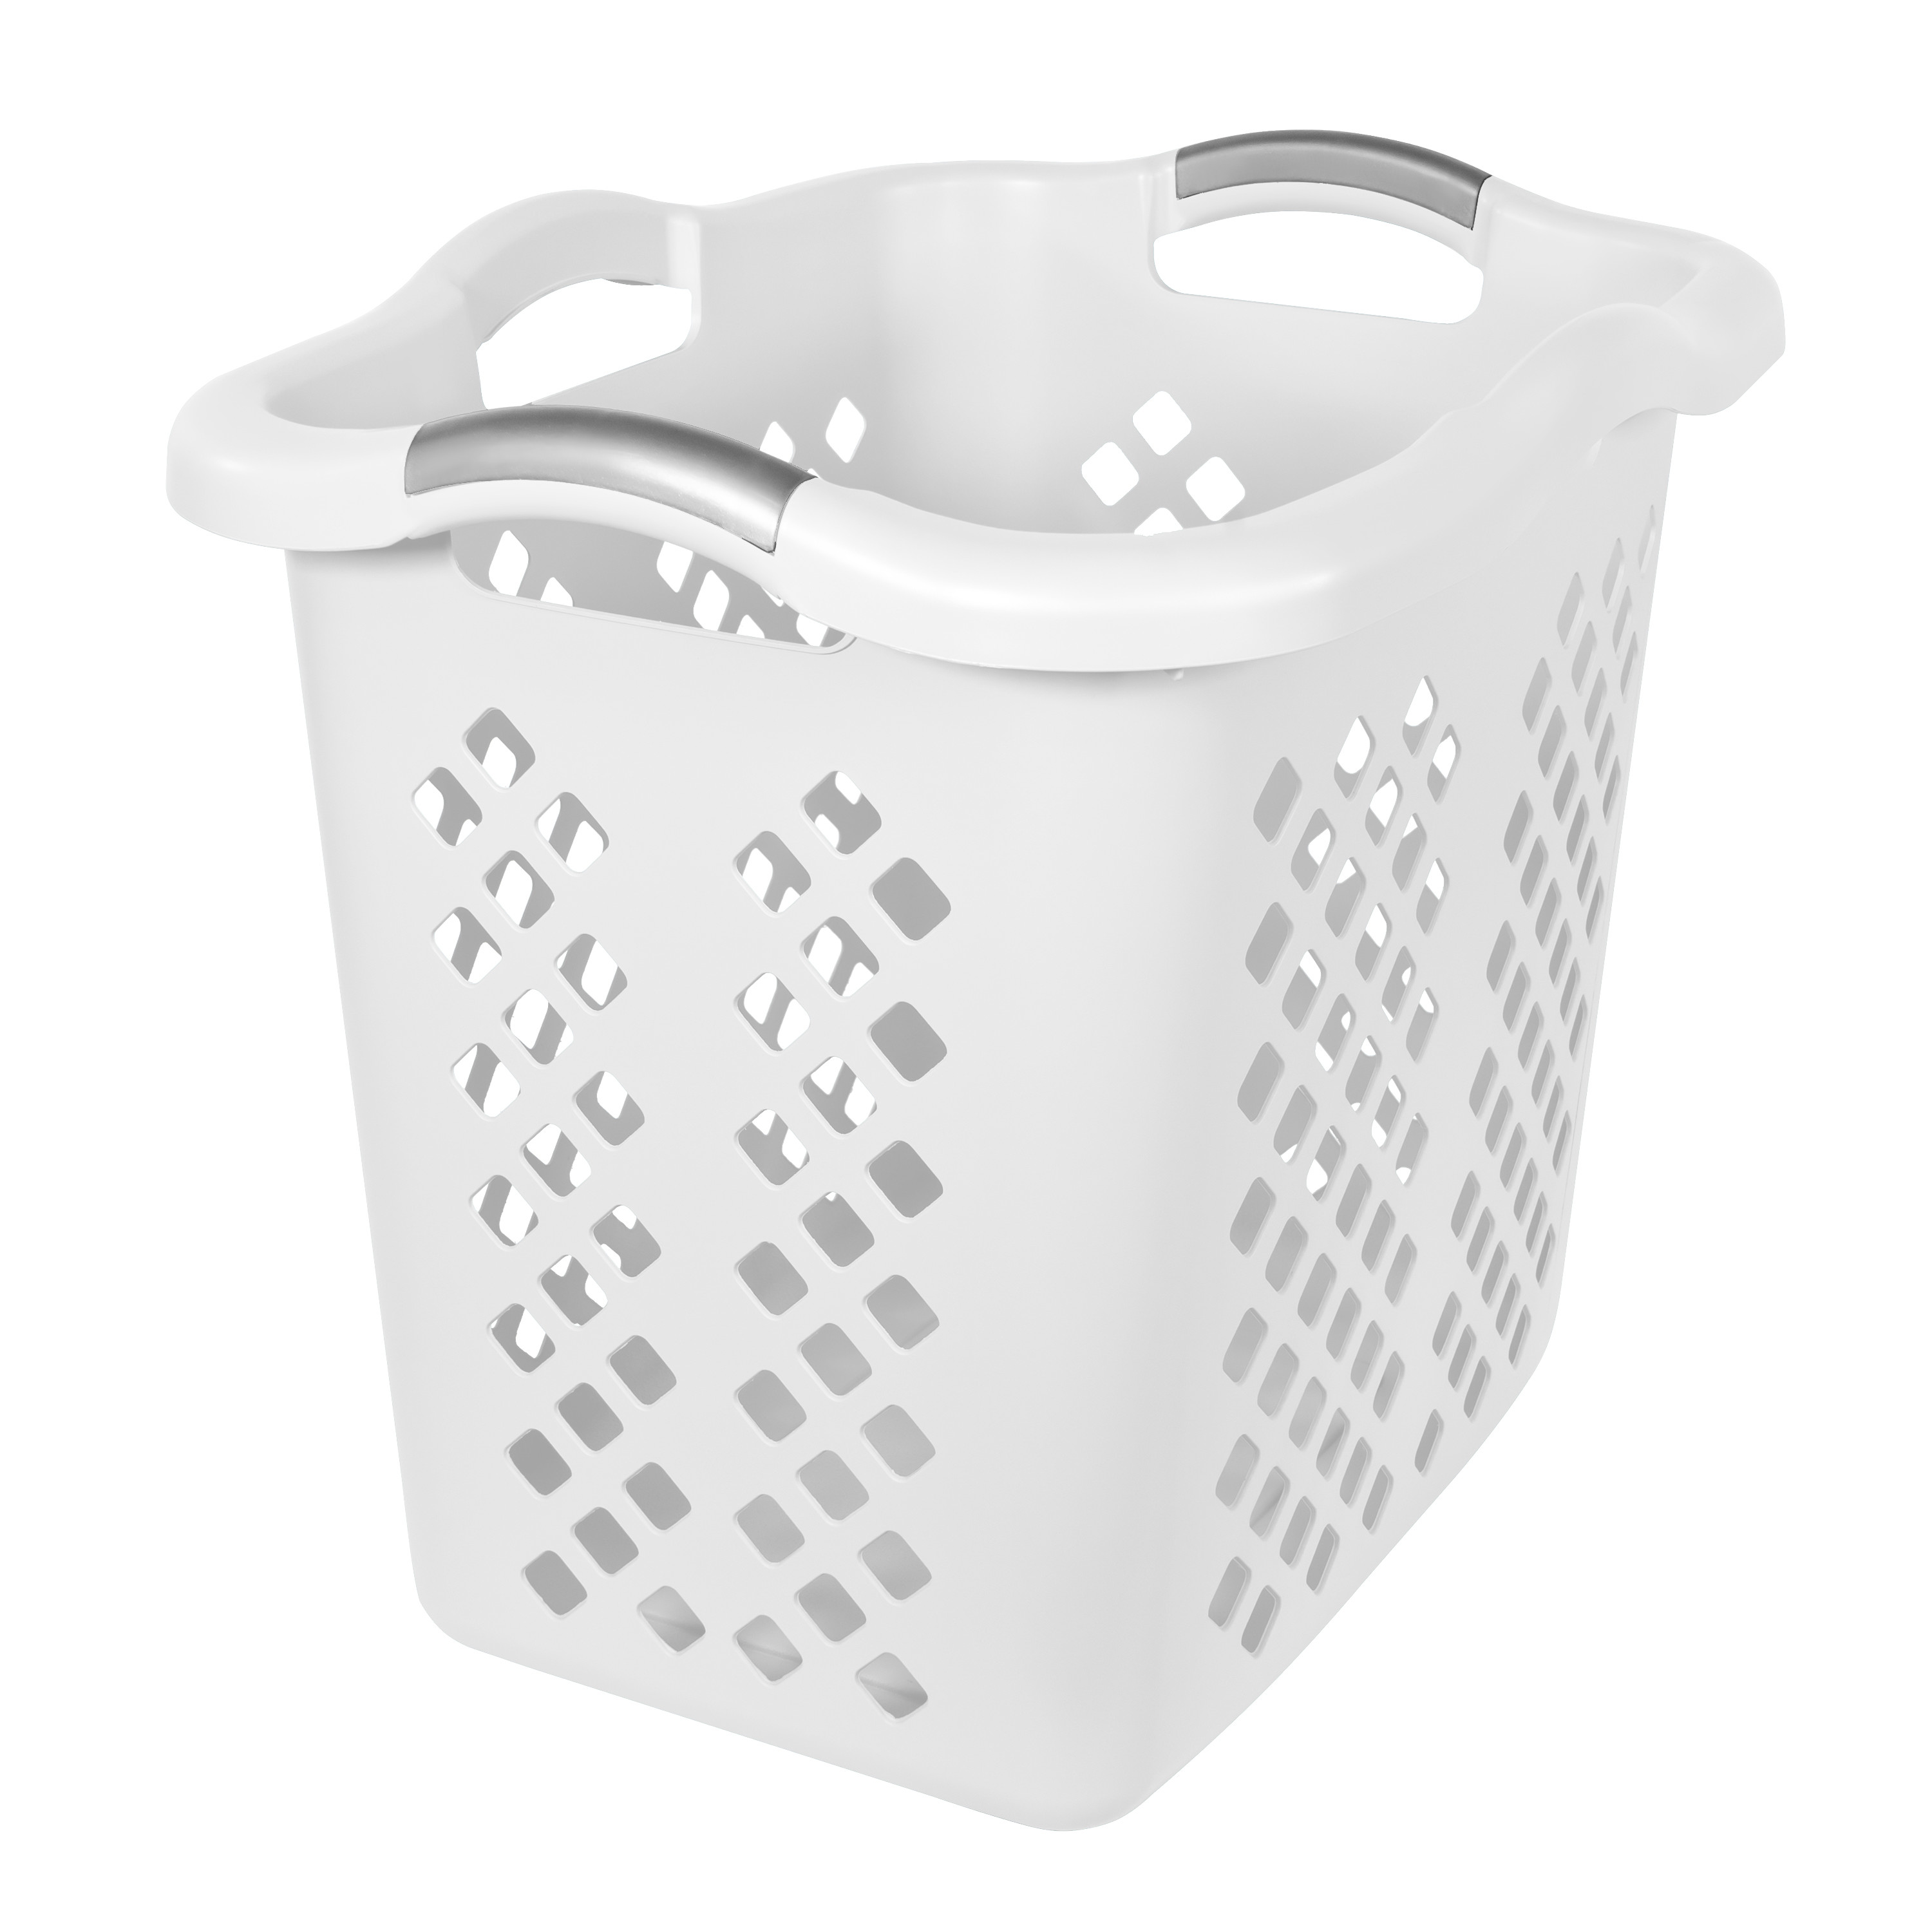 Home Logic 2 Bushel Lamper Laundry Basket with Silver Handles, White - image 3 of 8